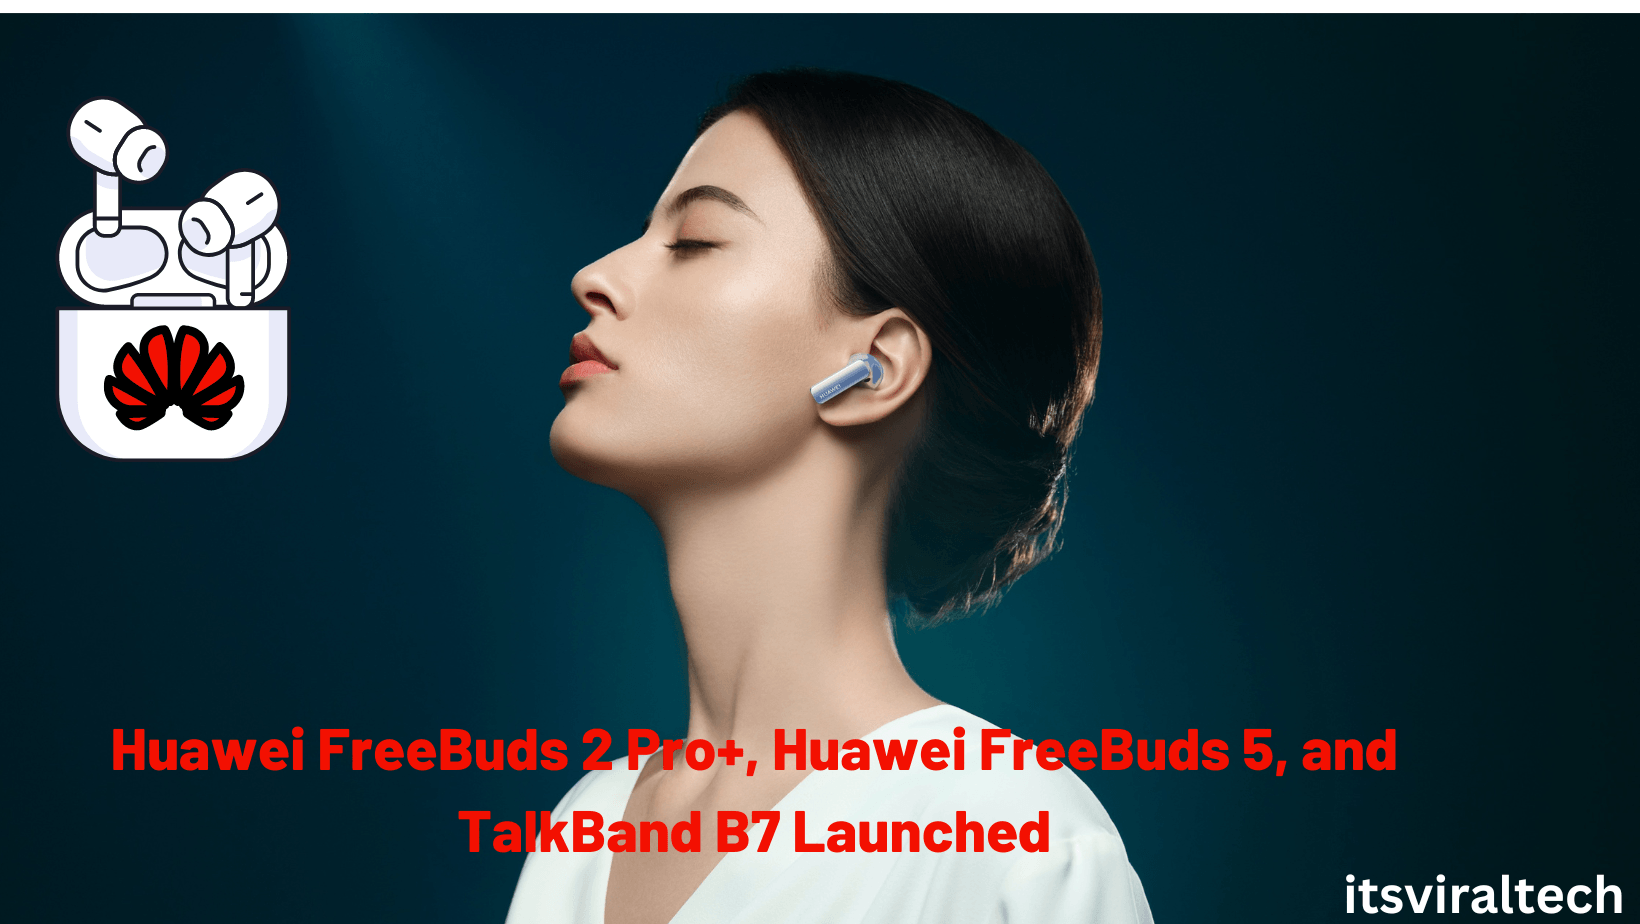 Huawei FreeBuds 2 Pro+